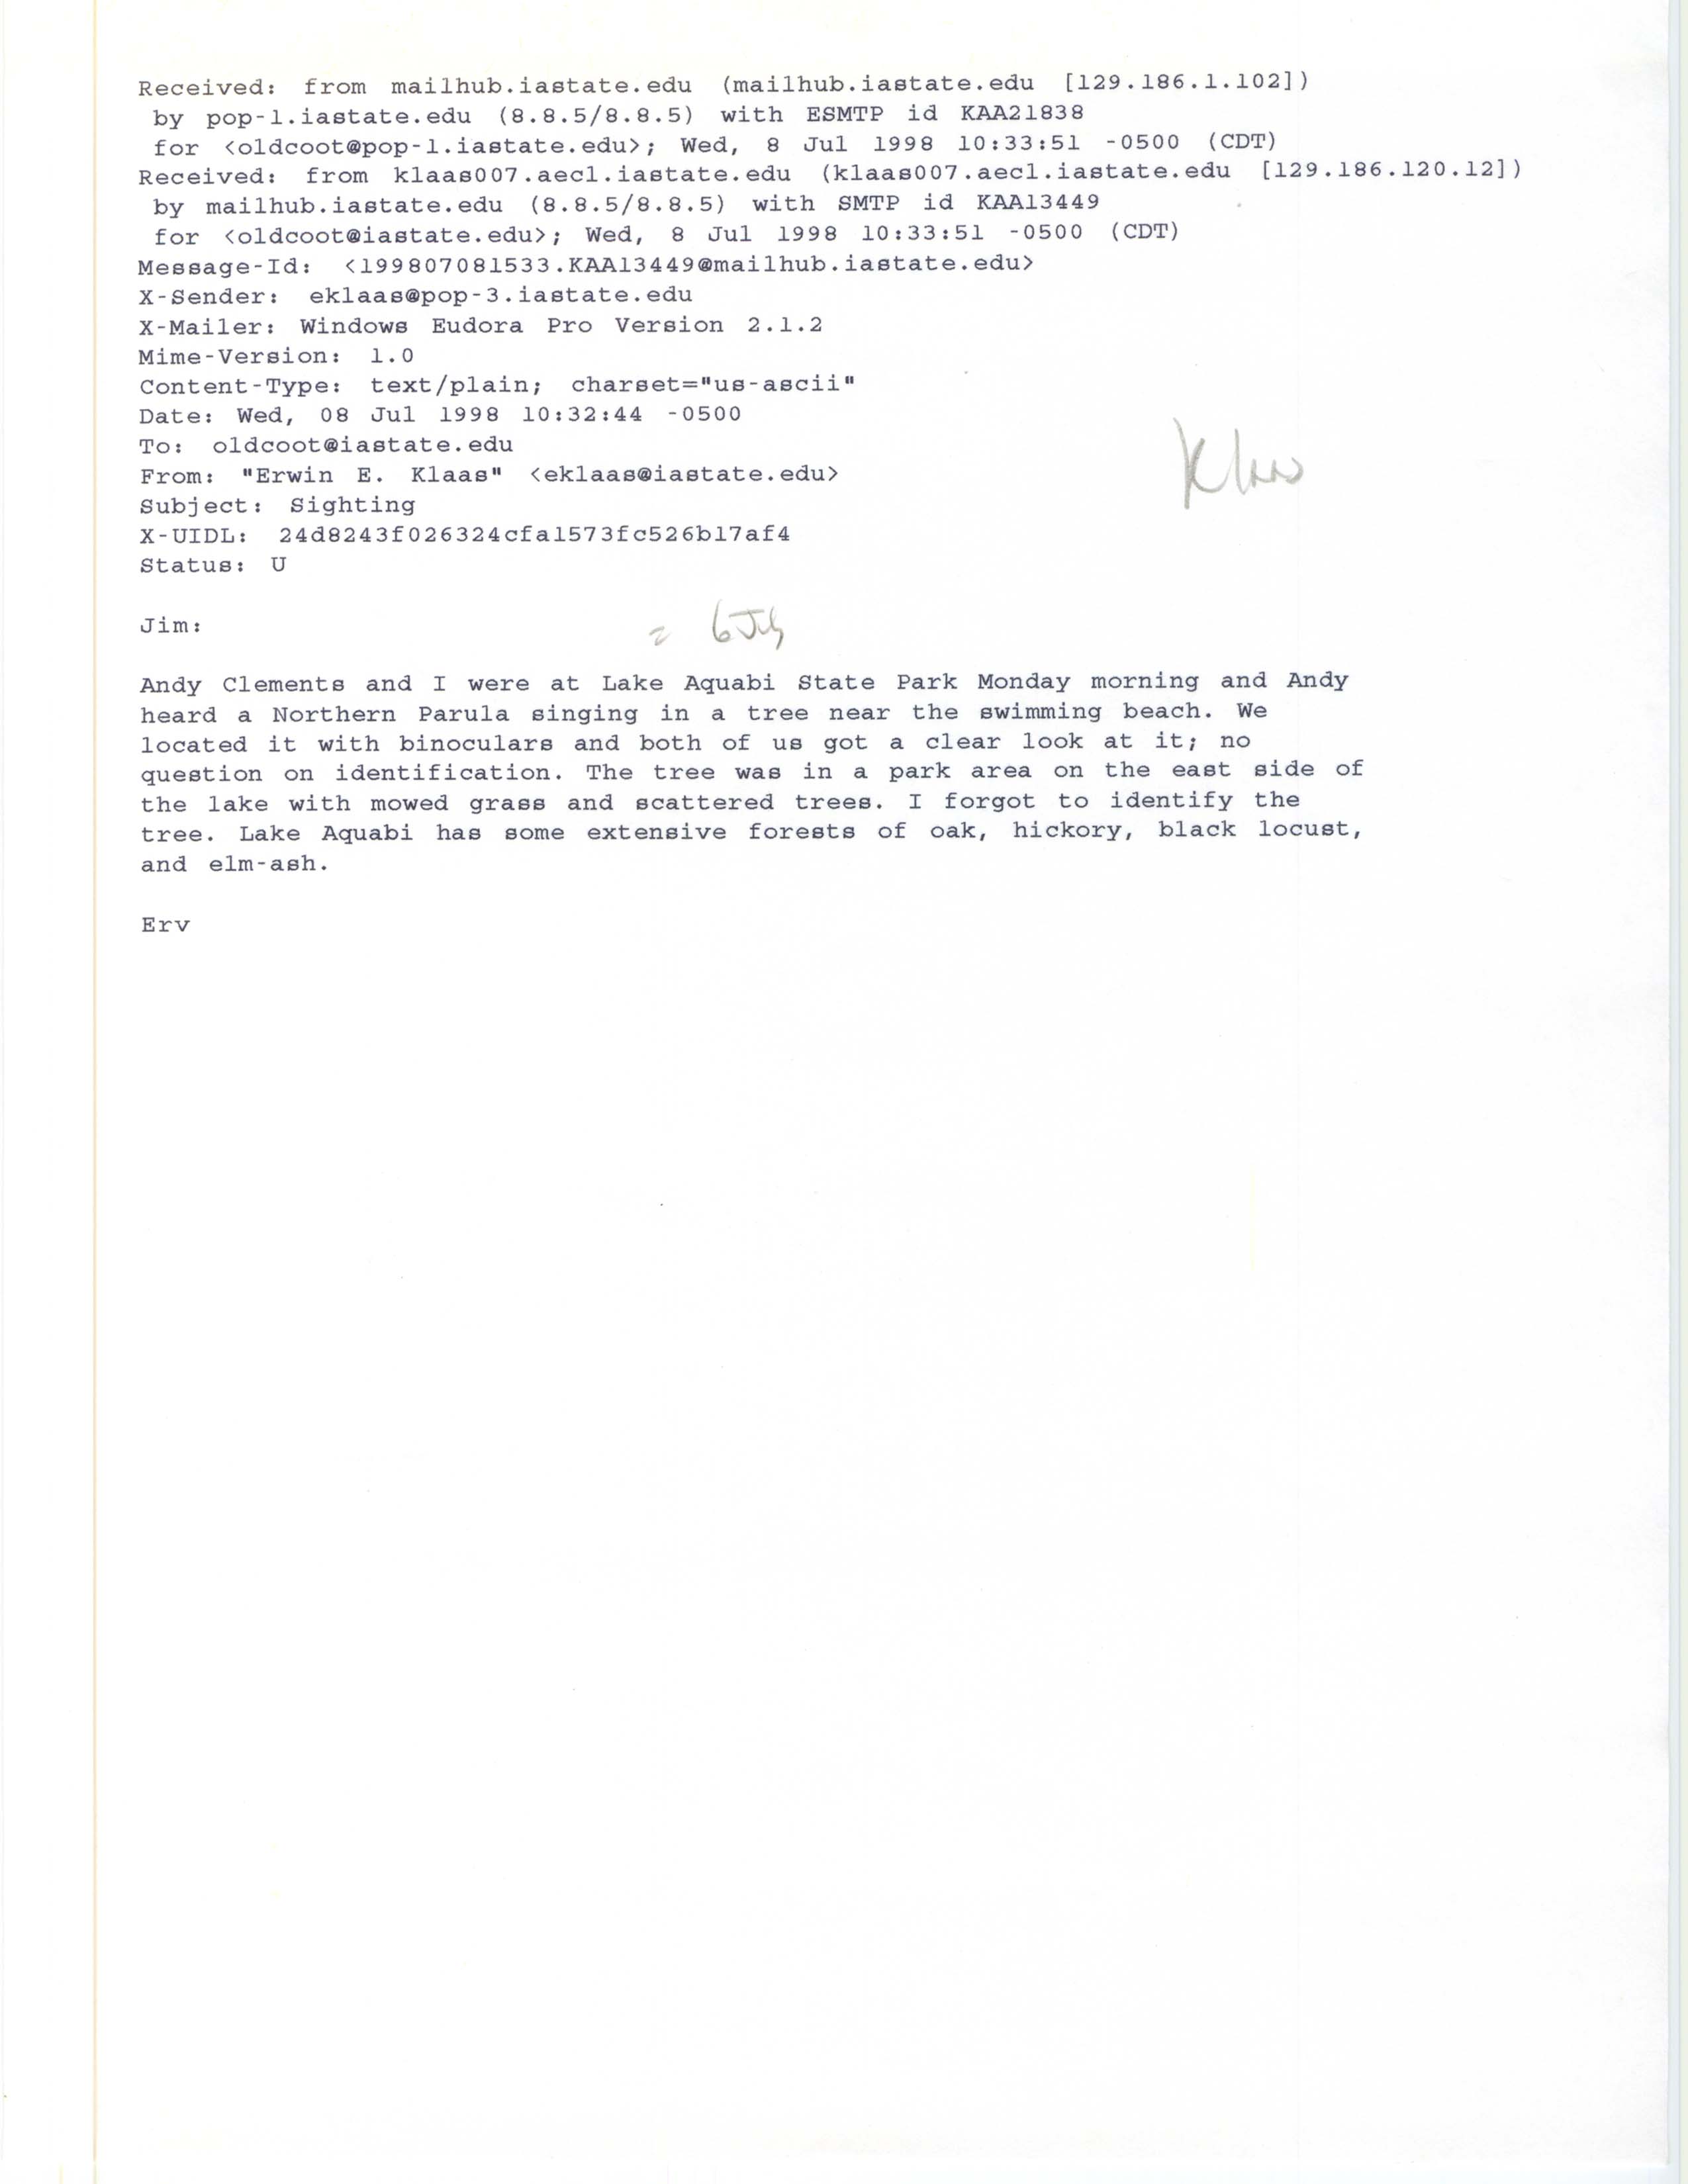 Erwin Klaas email to Jim Dinsmore regarding Northern Parula sighting, July 8, 1998